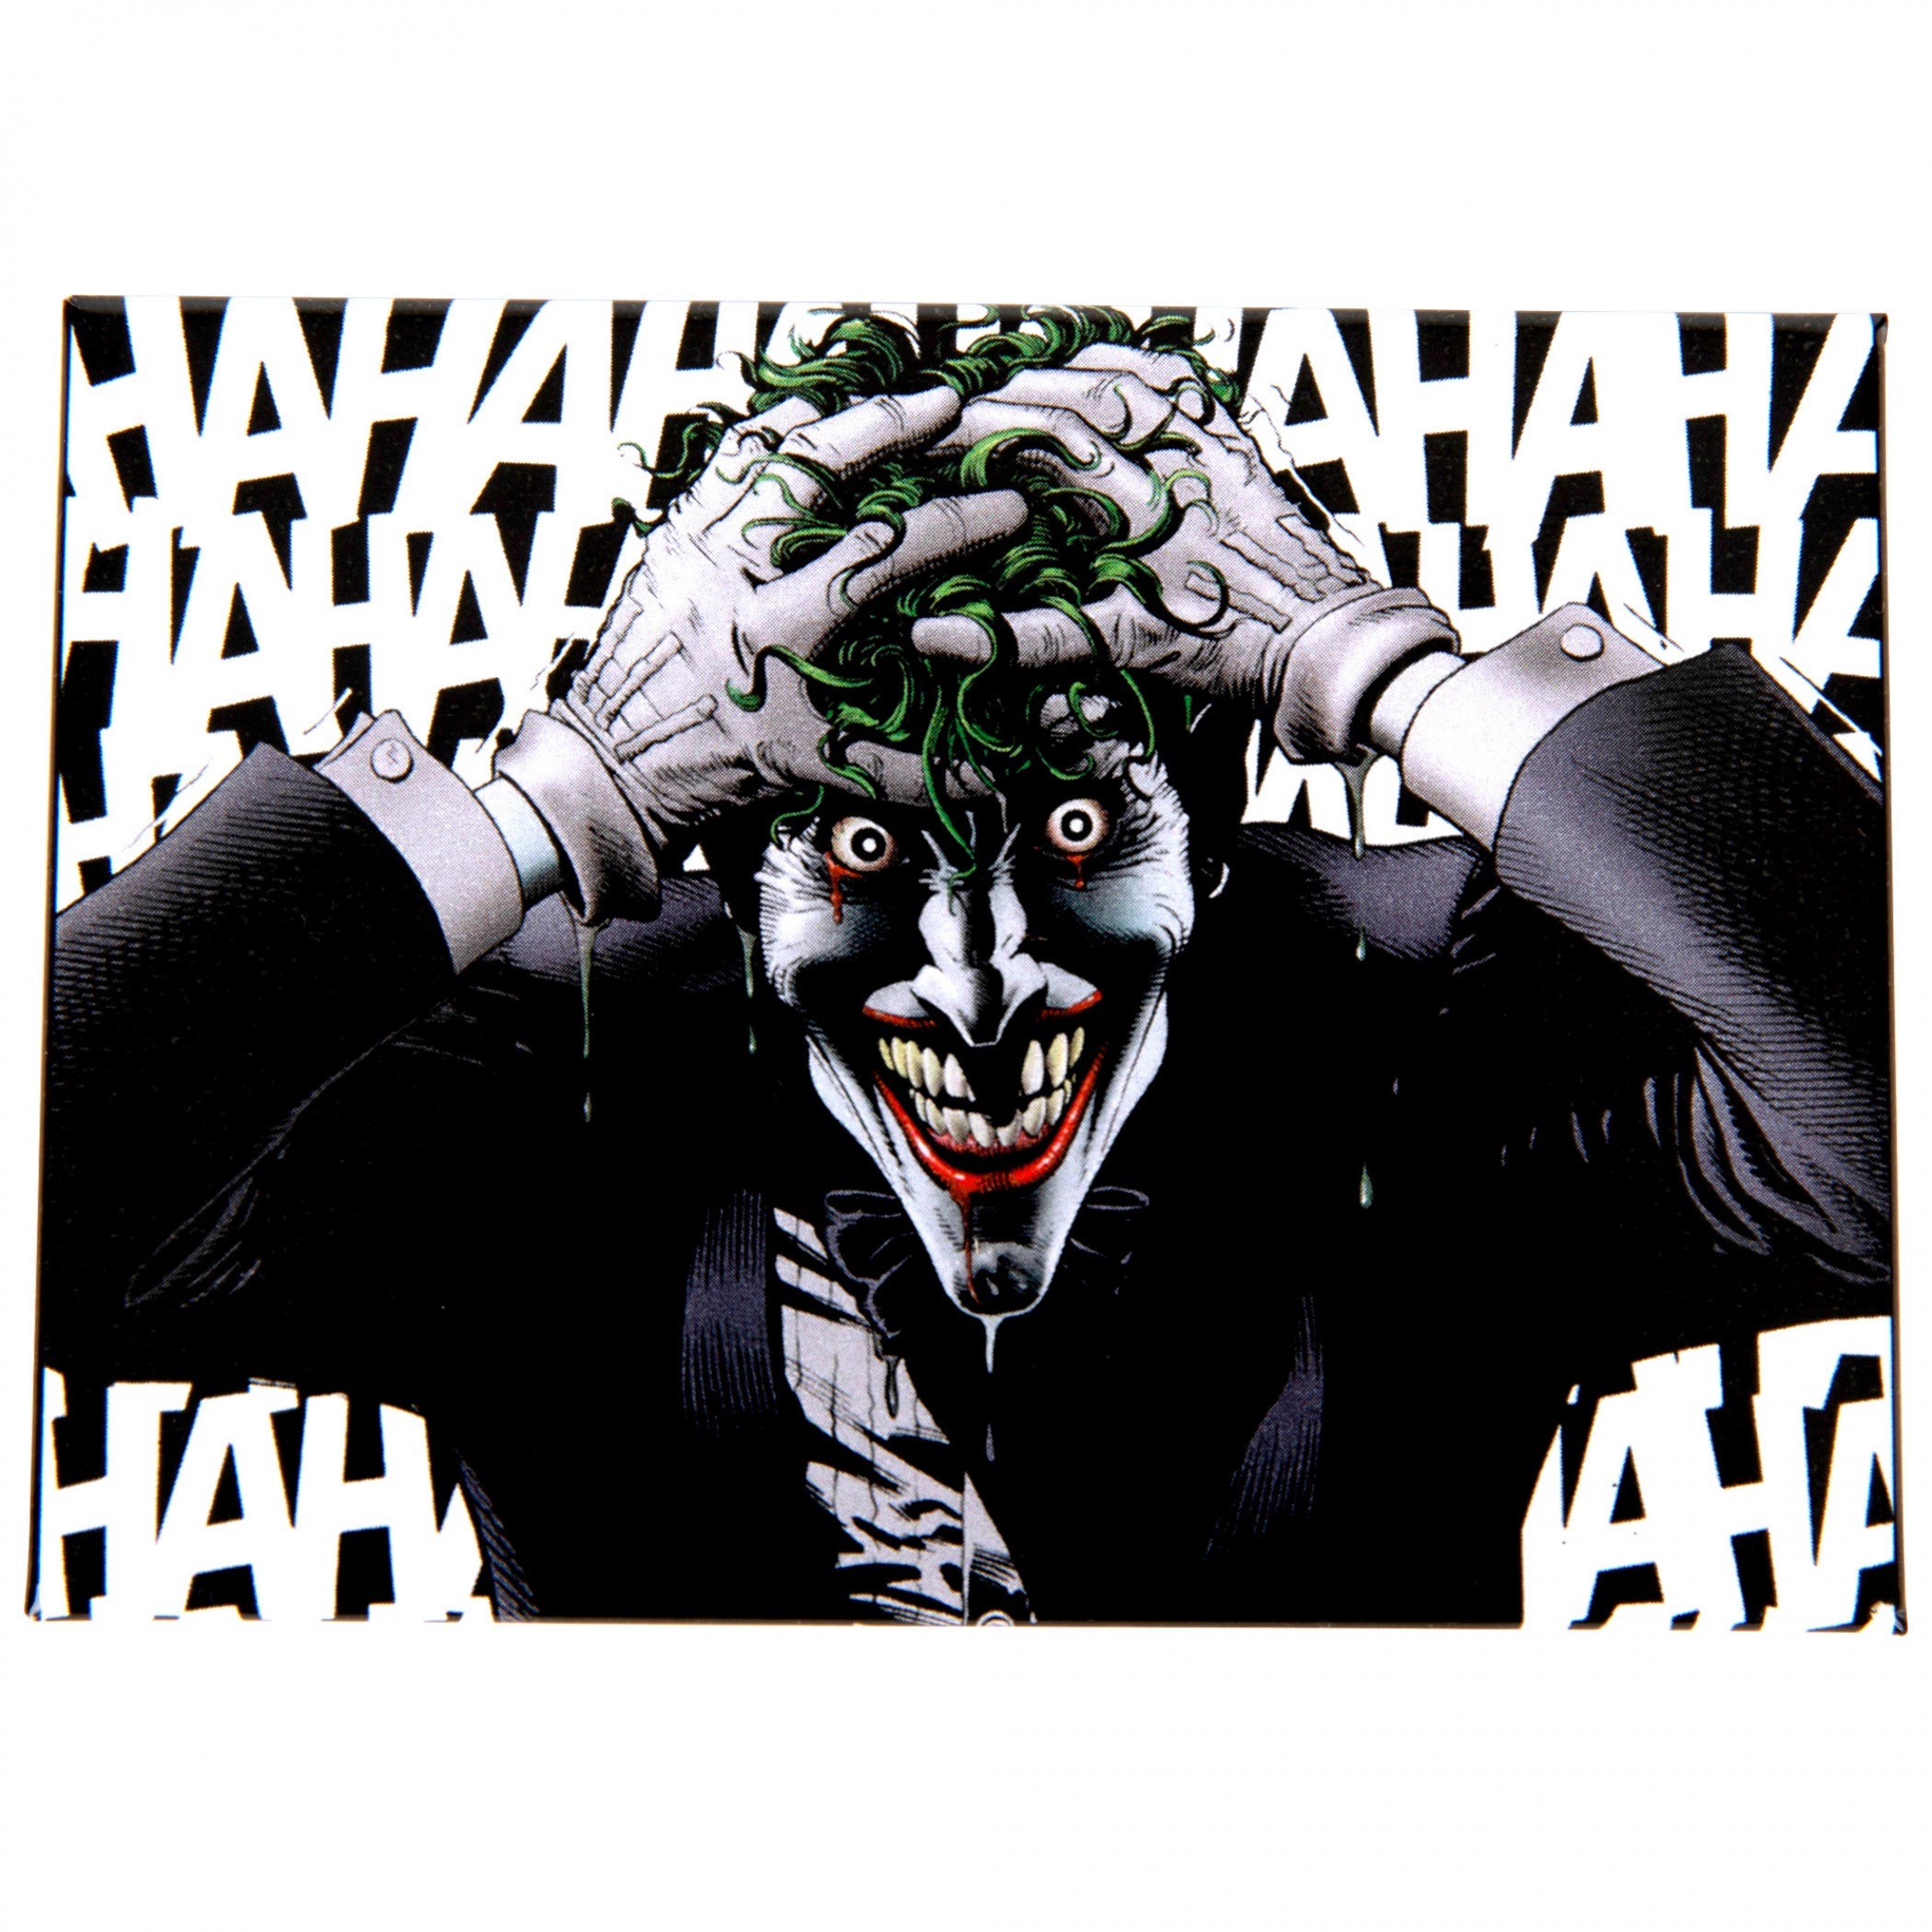 The Joker Mr. J. Collage PSD Boxer Briefs